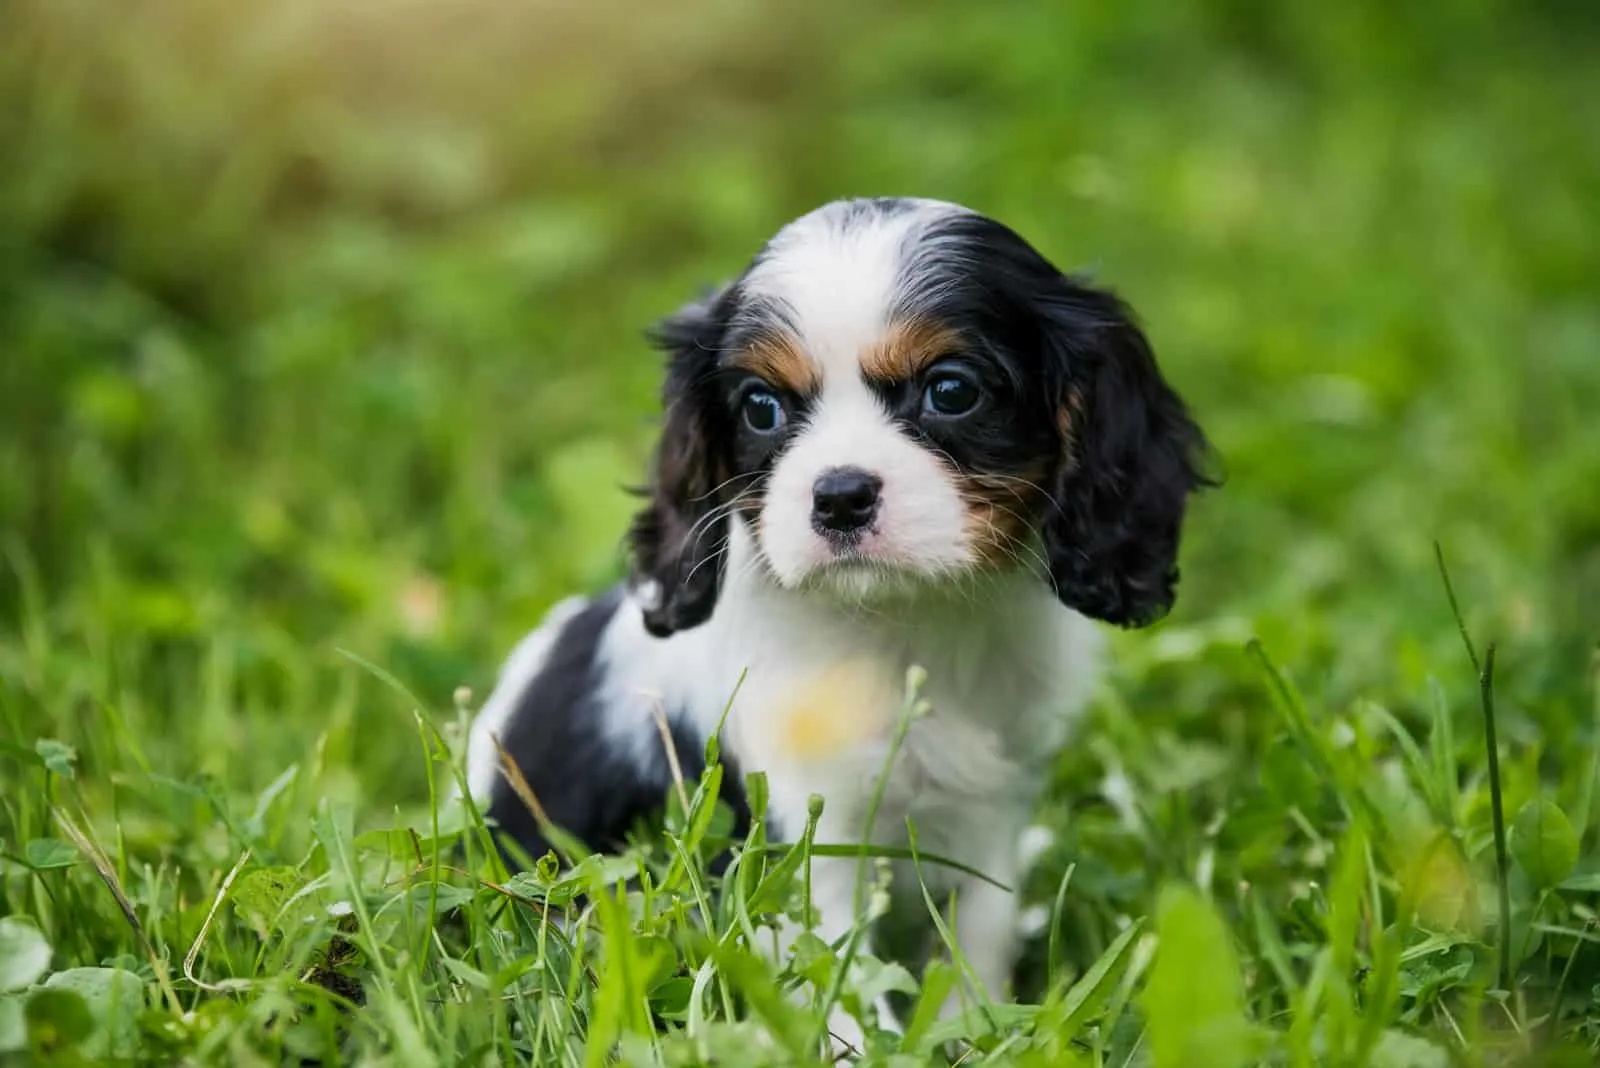 Cavalier King Charles Spaniel puppy sitting in grass